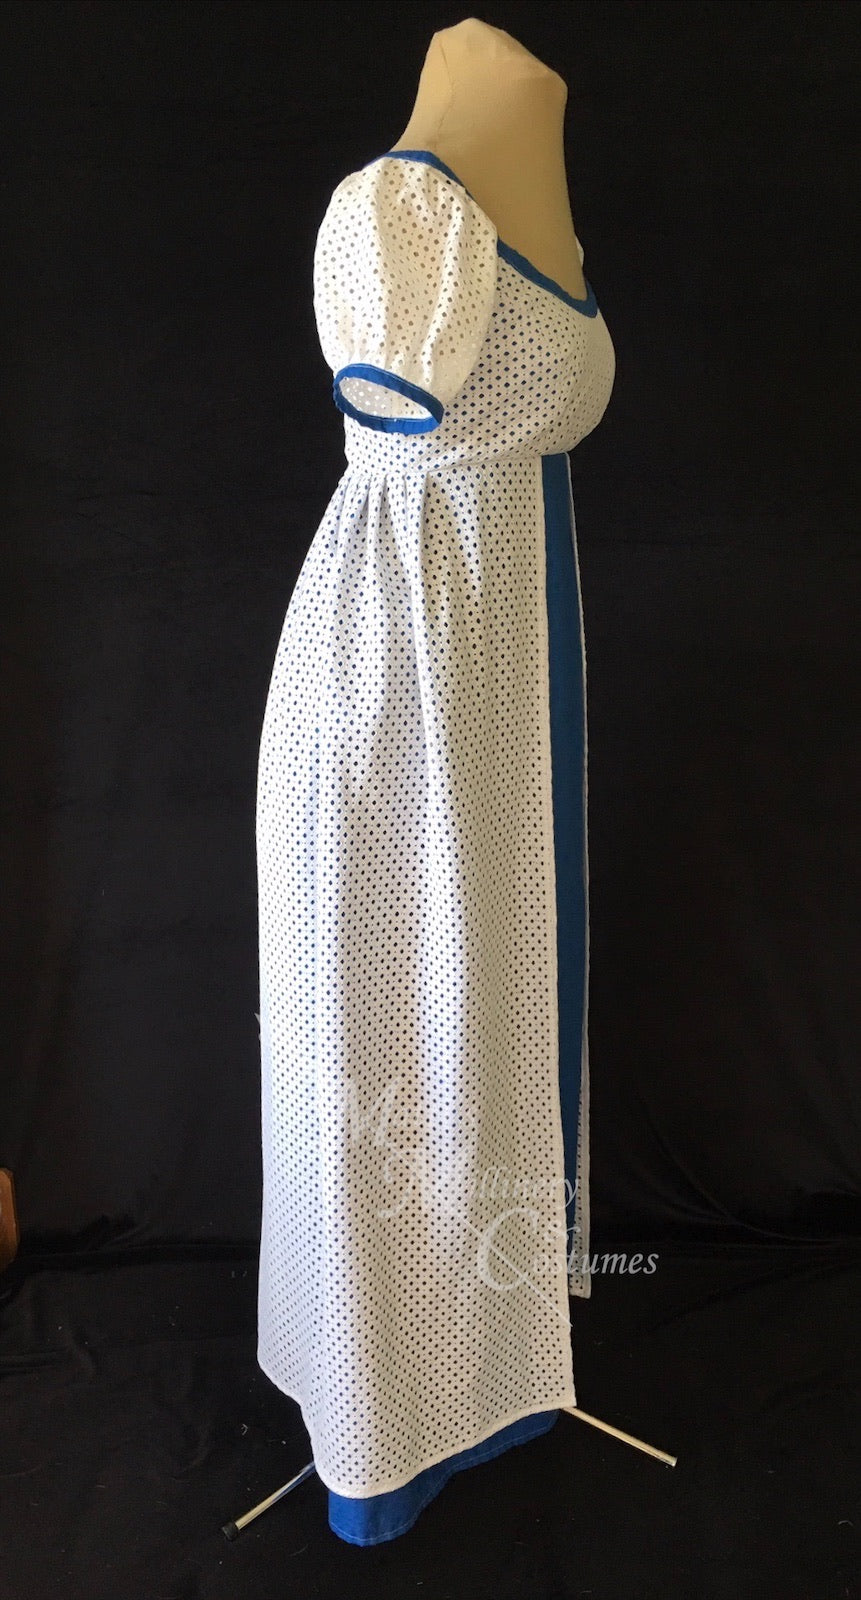 Blue White Elegant Eyelet Cotton Regency Jane Austen Day Dress Gown